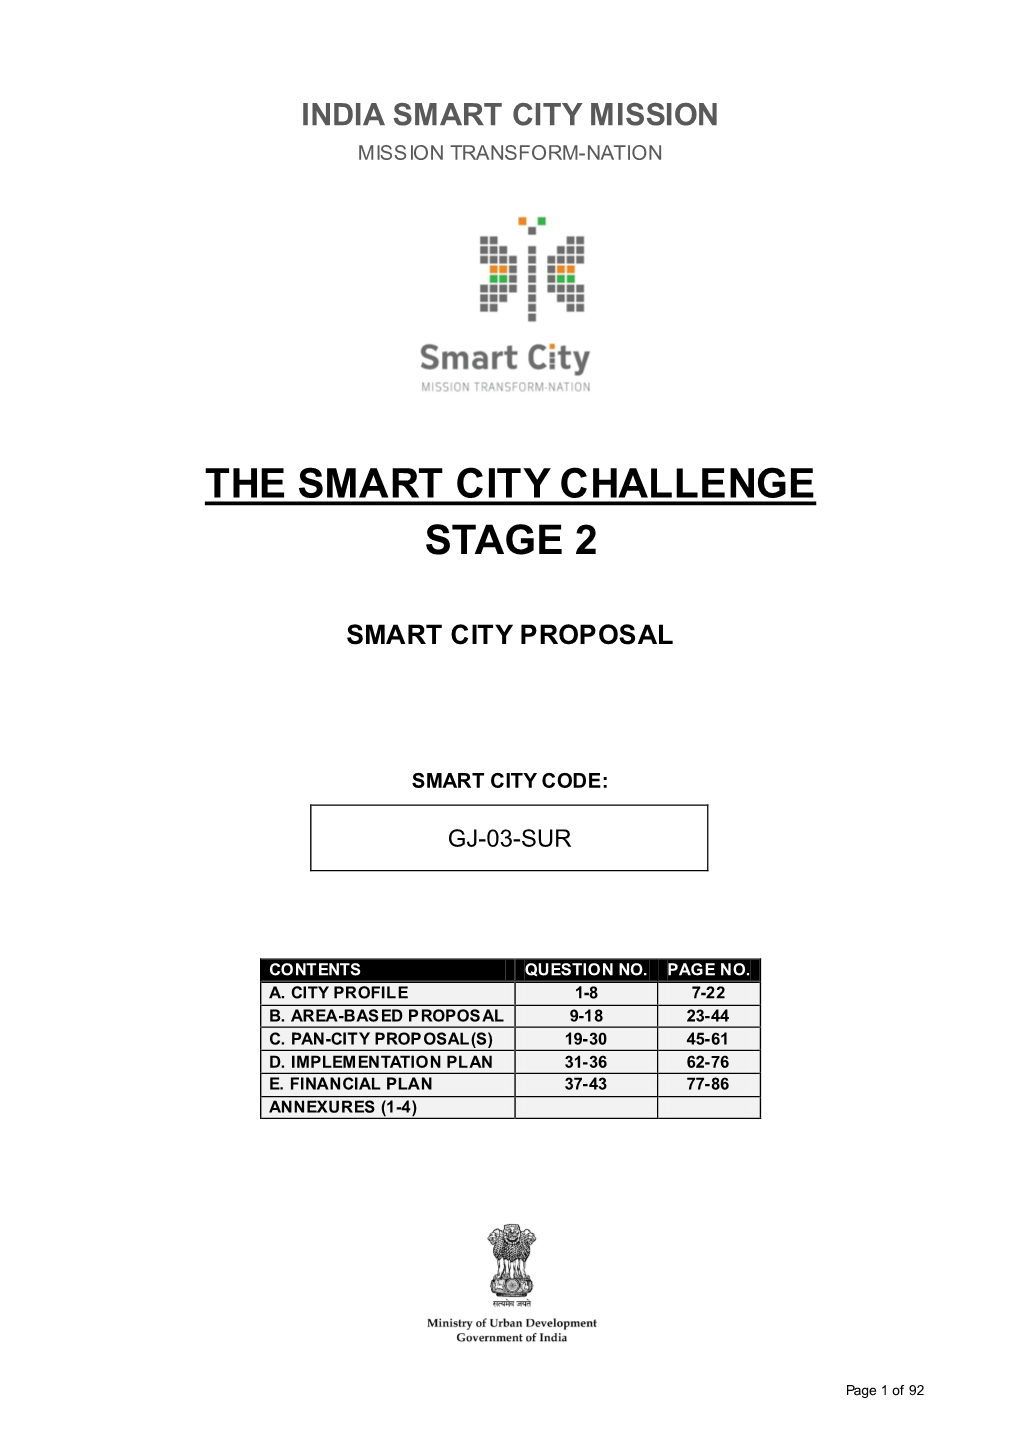 India Smart City Mission